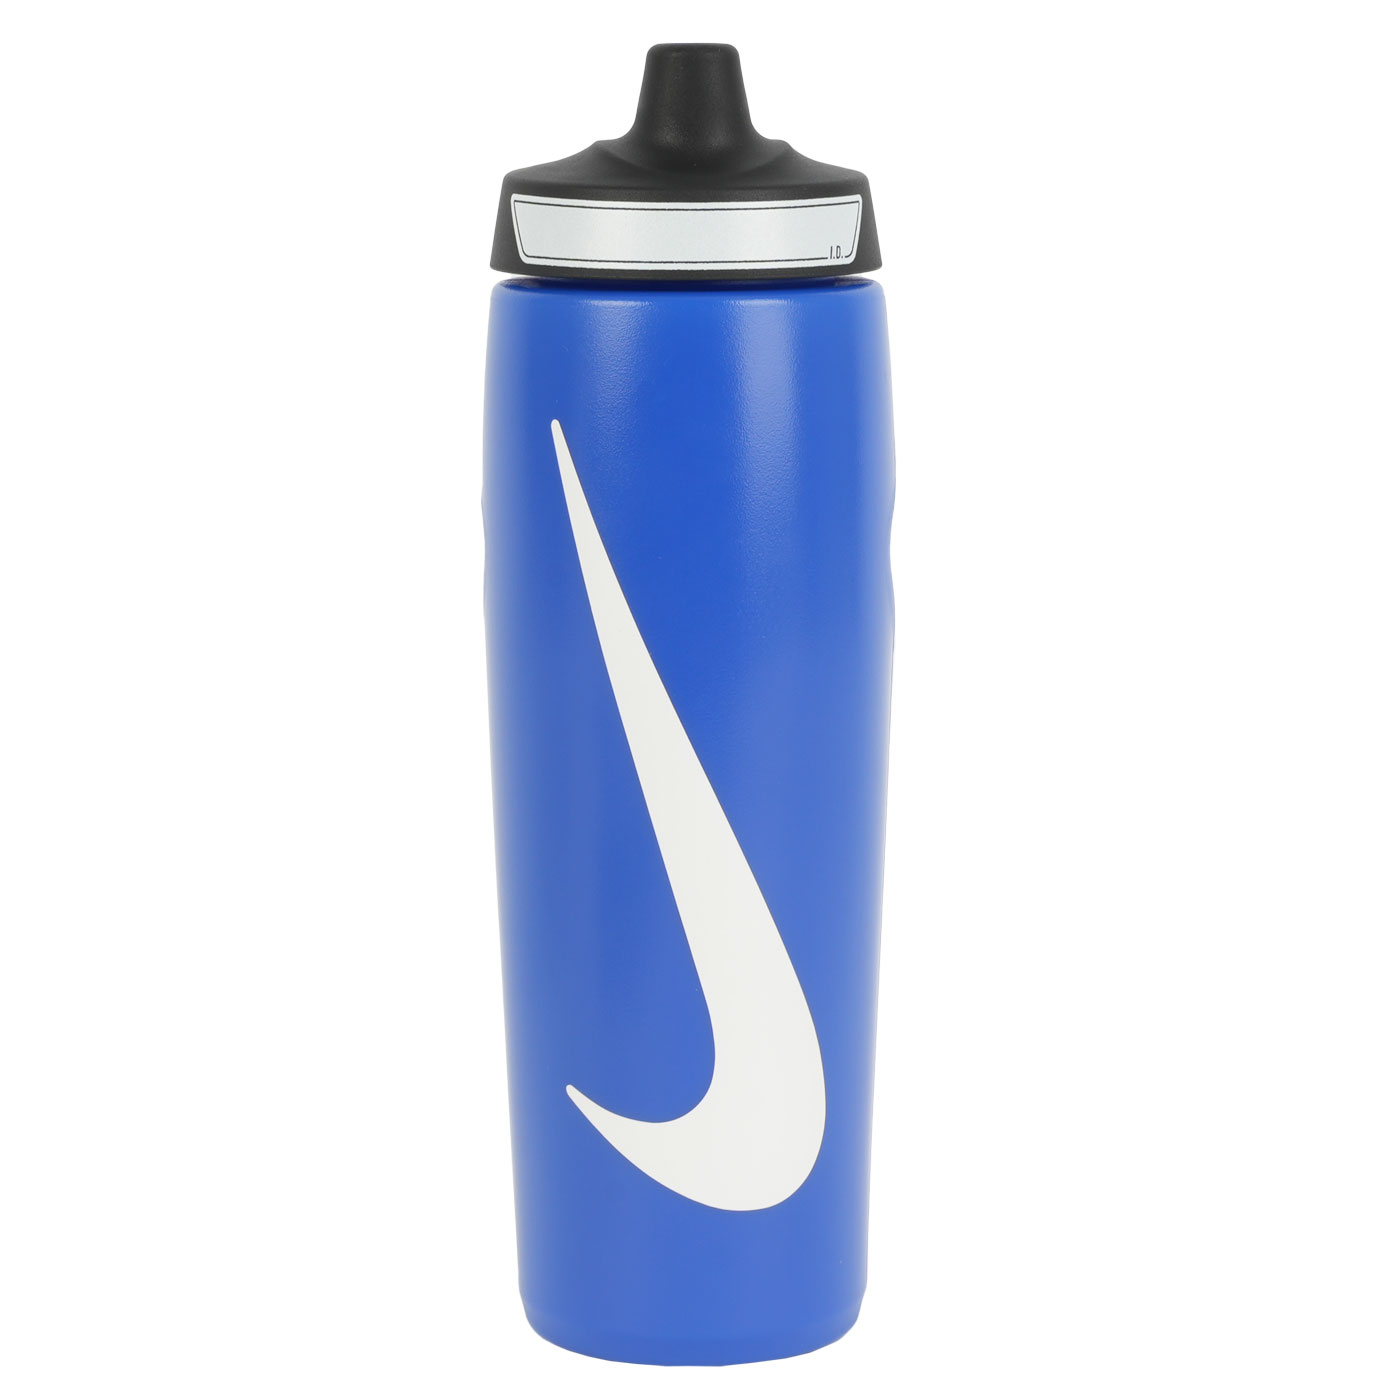 Productfoto van Nike Refuel Bottle Grip Sport-Waterfles 24 oz / 709ml - game royal/black/white 417